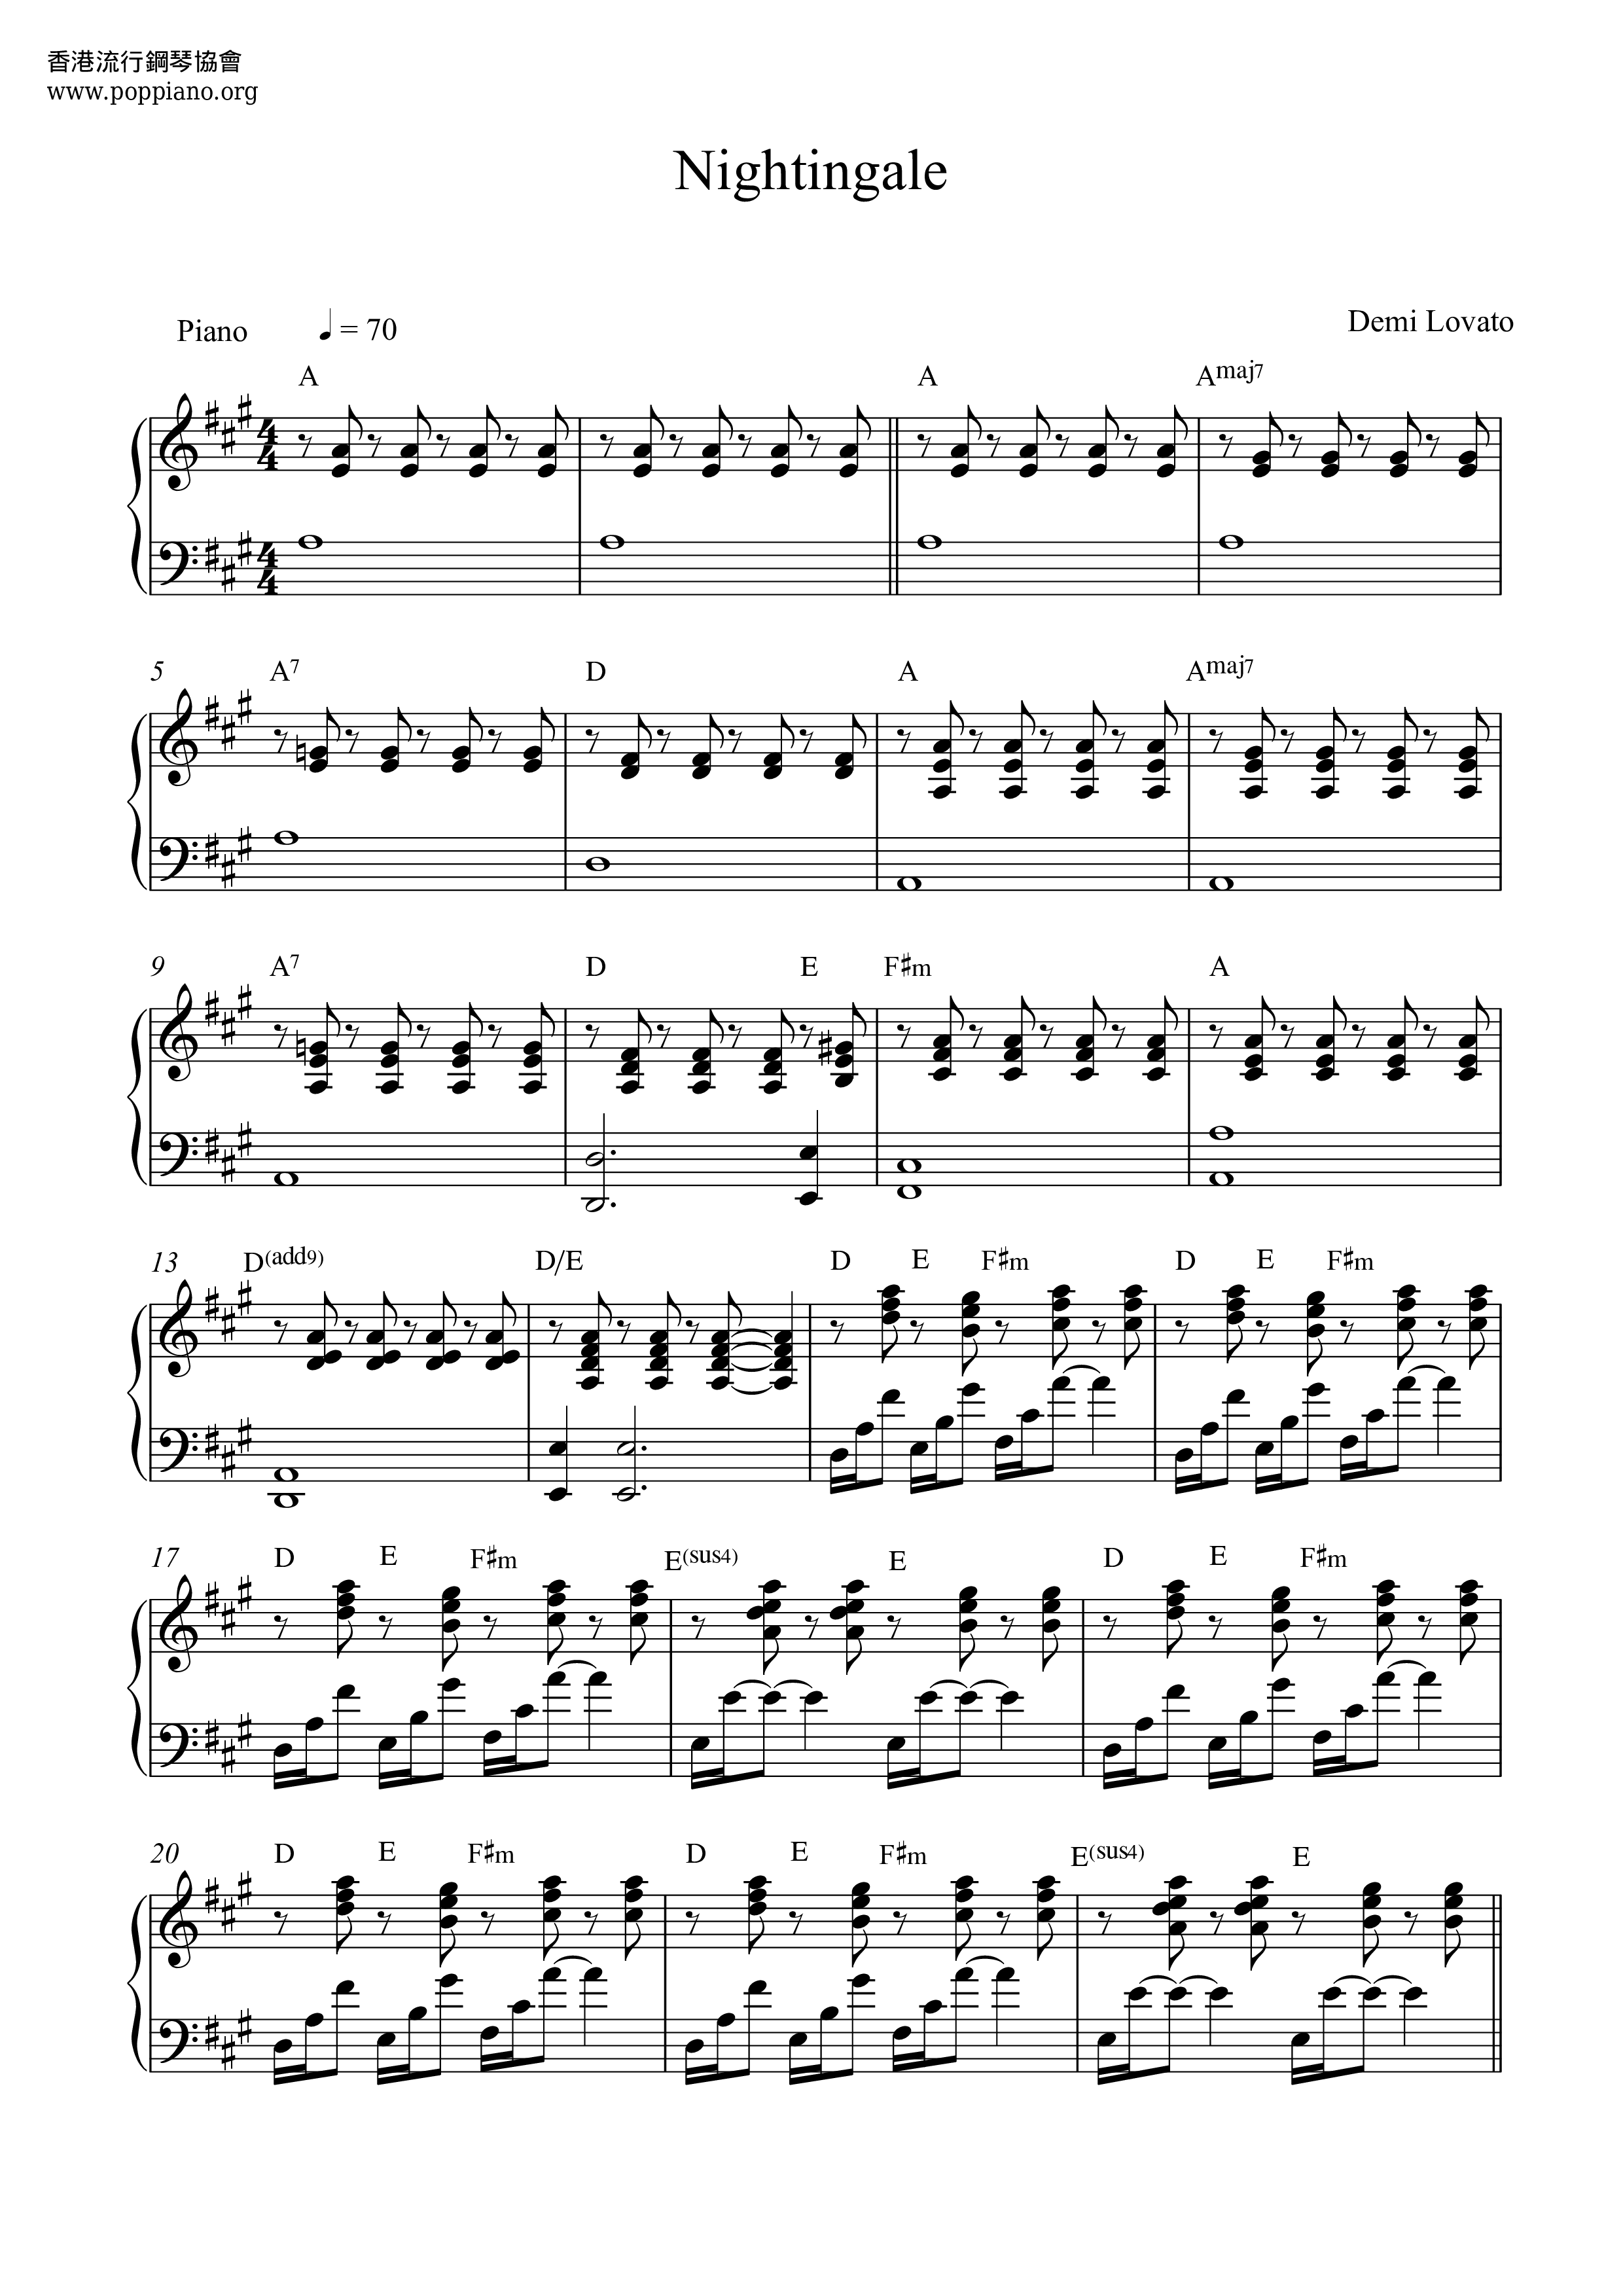 Nightingale Score